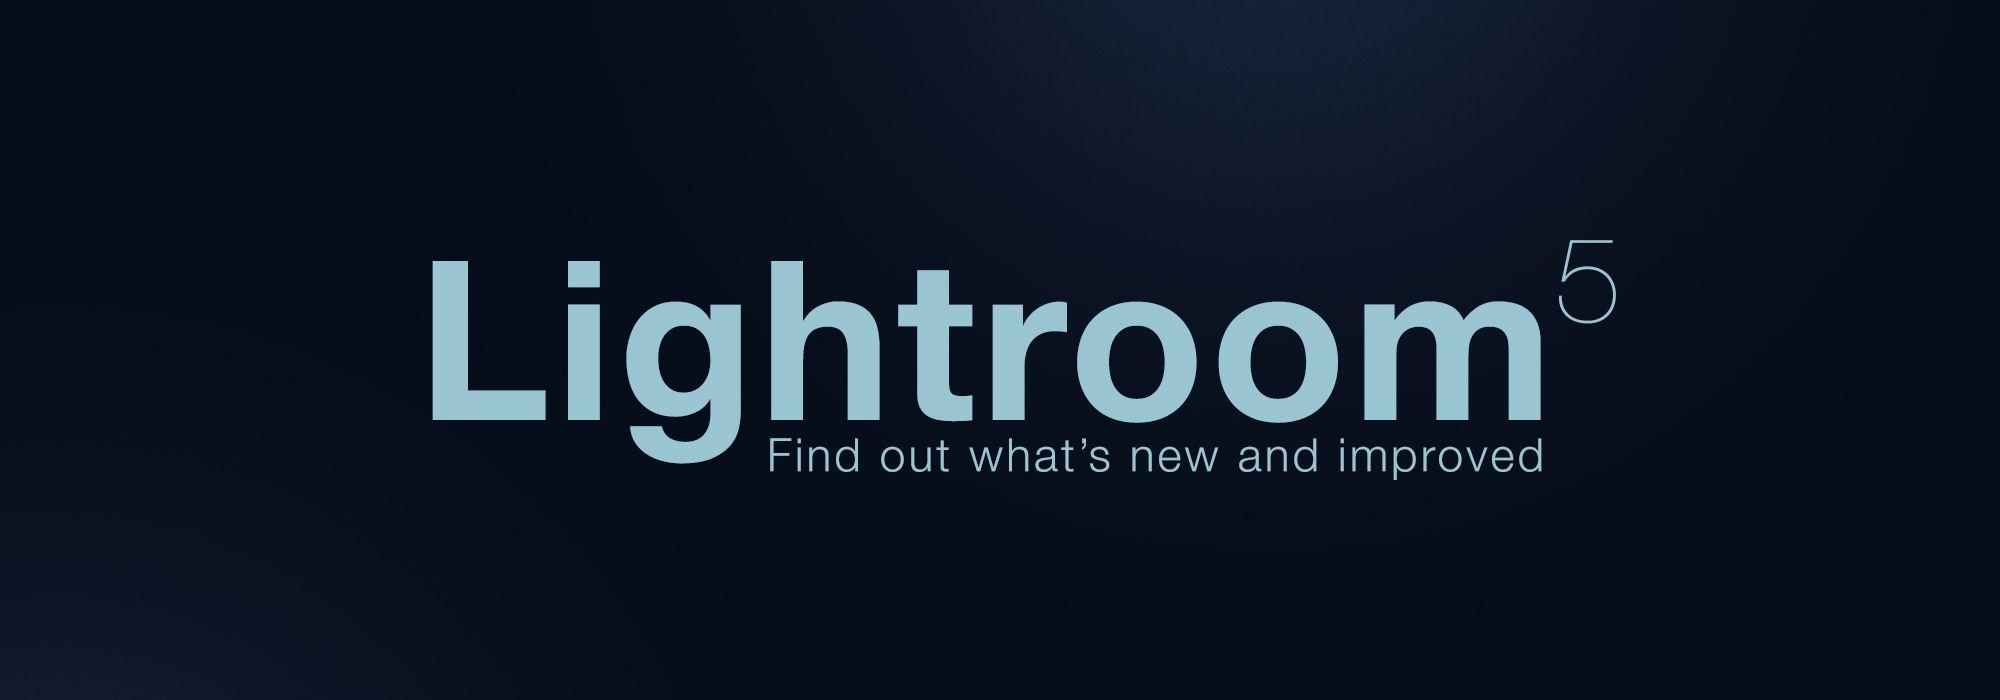 Adobe Lightroom Logo - Adobe releases Photoshop Lightroom 5 - PC Tech Magazine